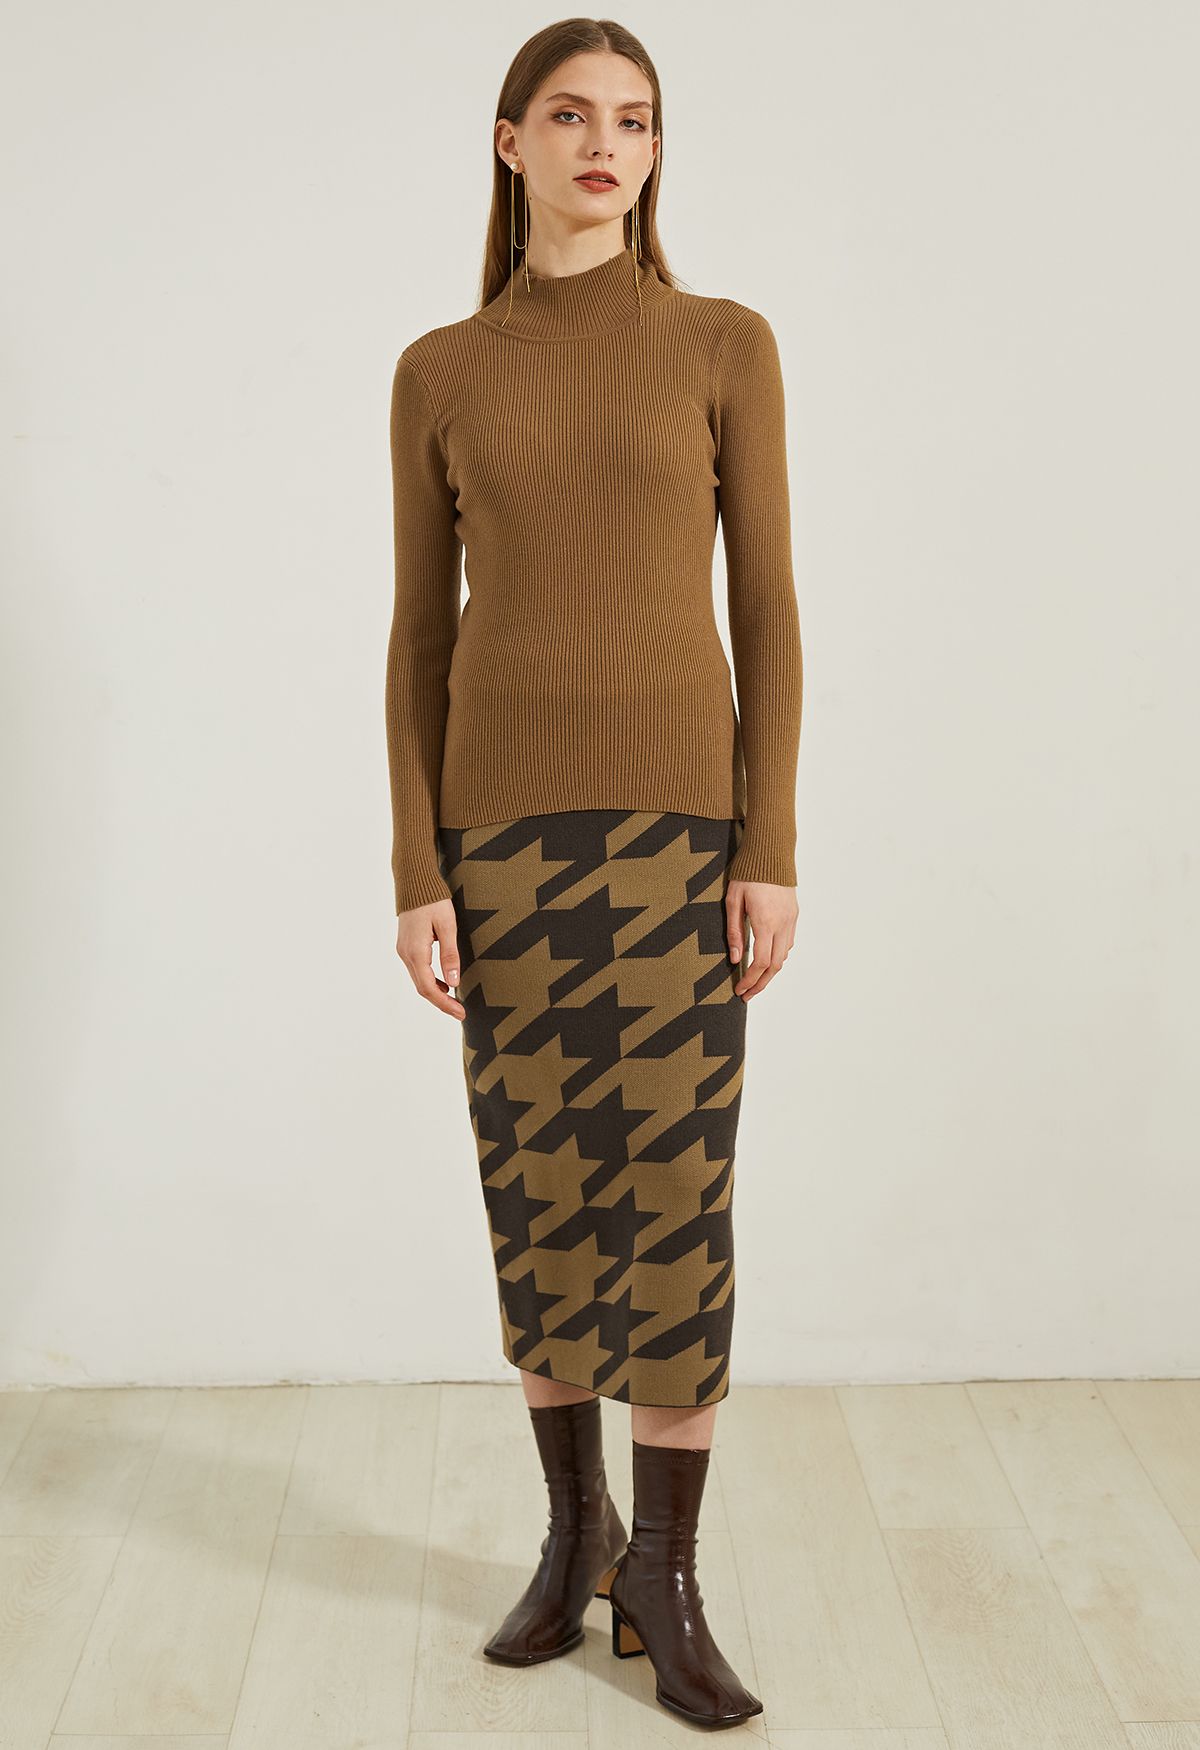 Houndstooth Pattern Back Slit Pencil Skirt in Tan